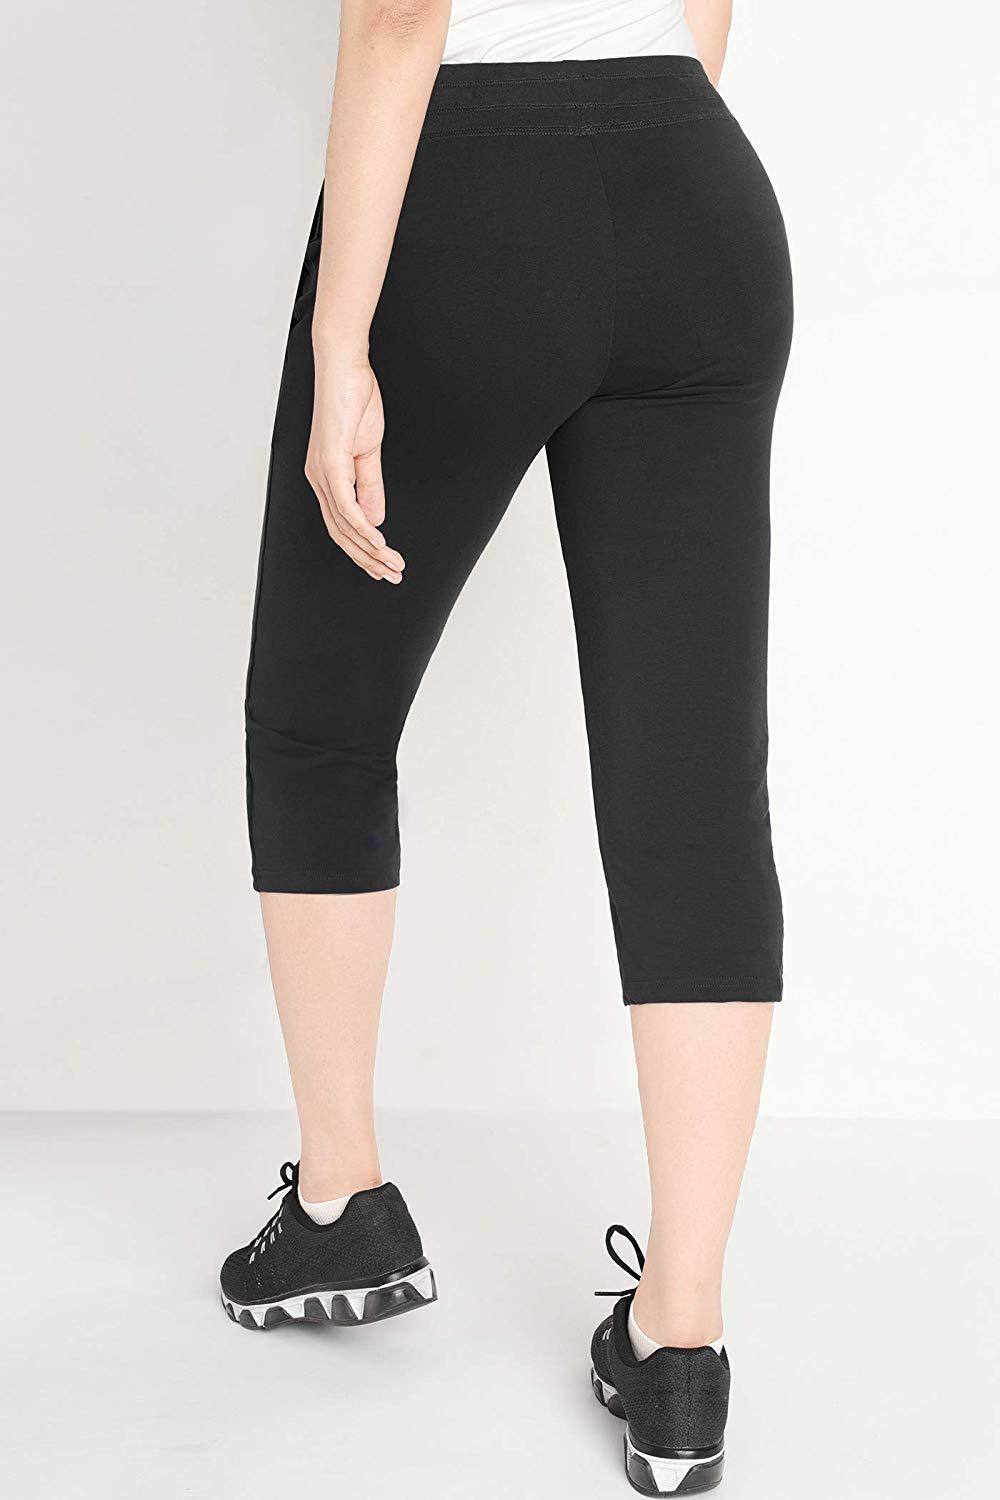 MOREFEEL Women's Knee Length Leggings with Pockets-High Waist Capri Pants for  Women Yoga Workout Biker Shorts Casual Summer - Yahoo Shopping